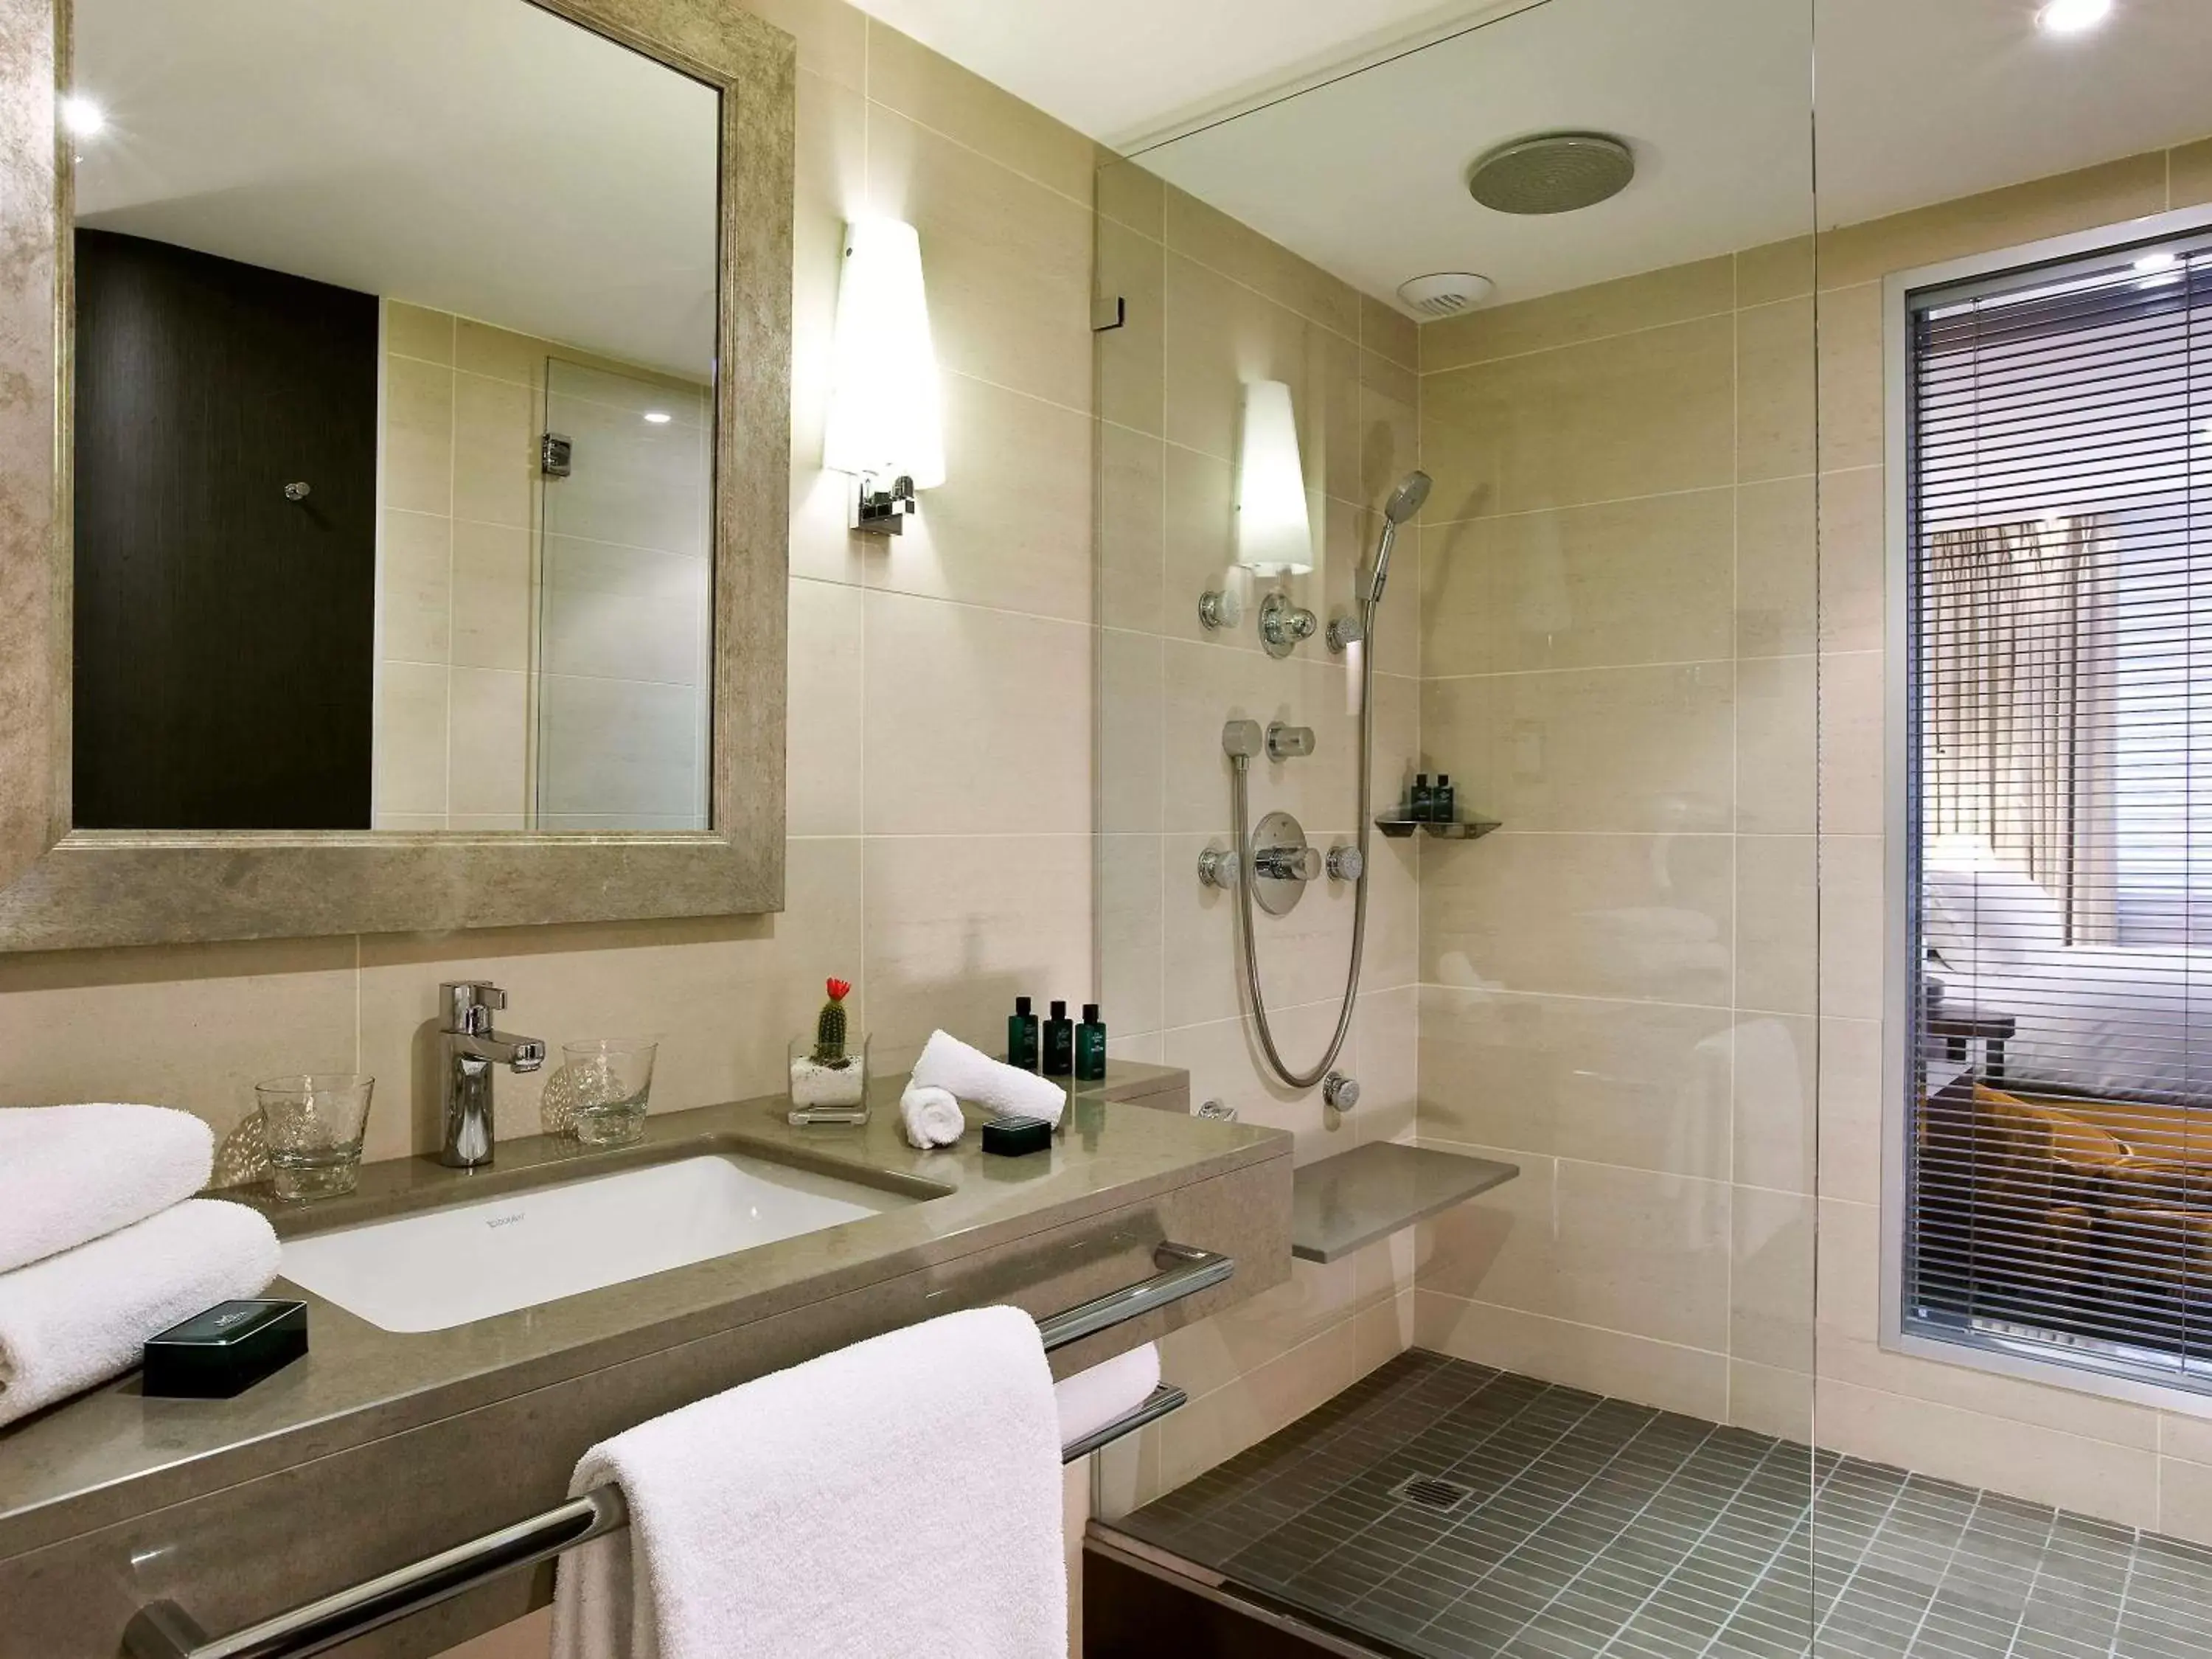 Photo of the whole room, Bathroom in Sofitel Marseille Vieux-Port